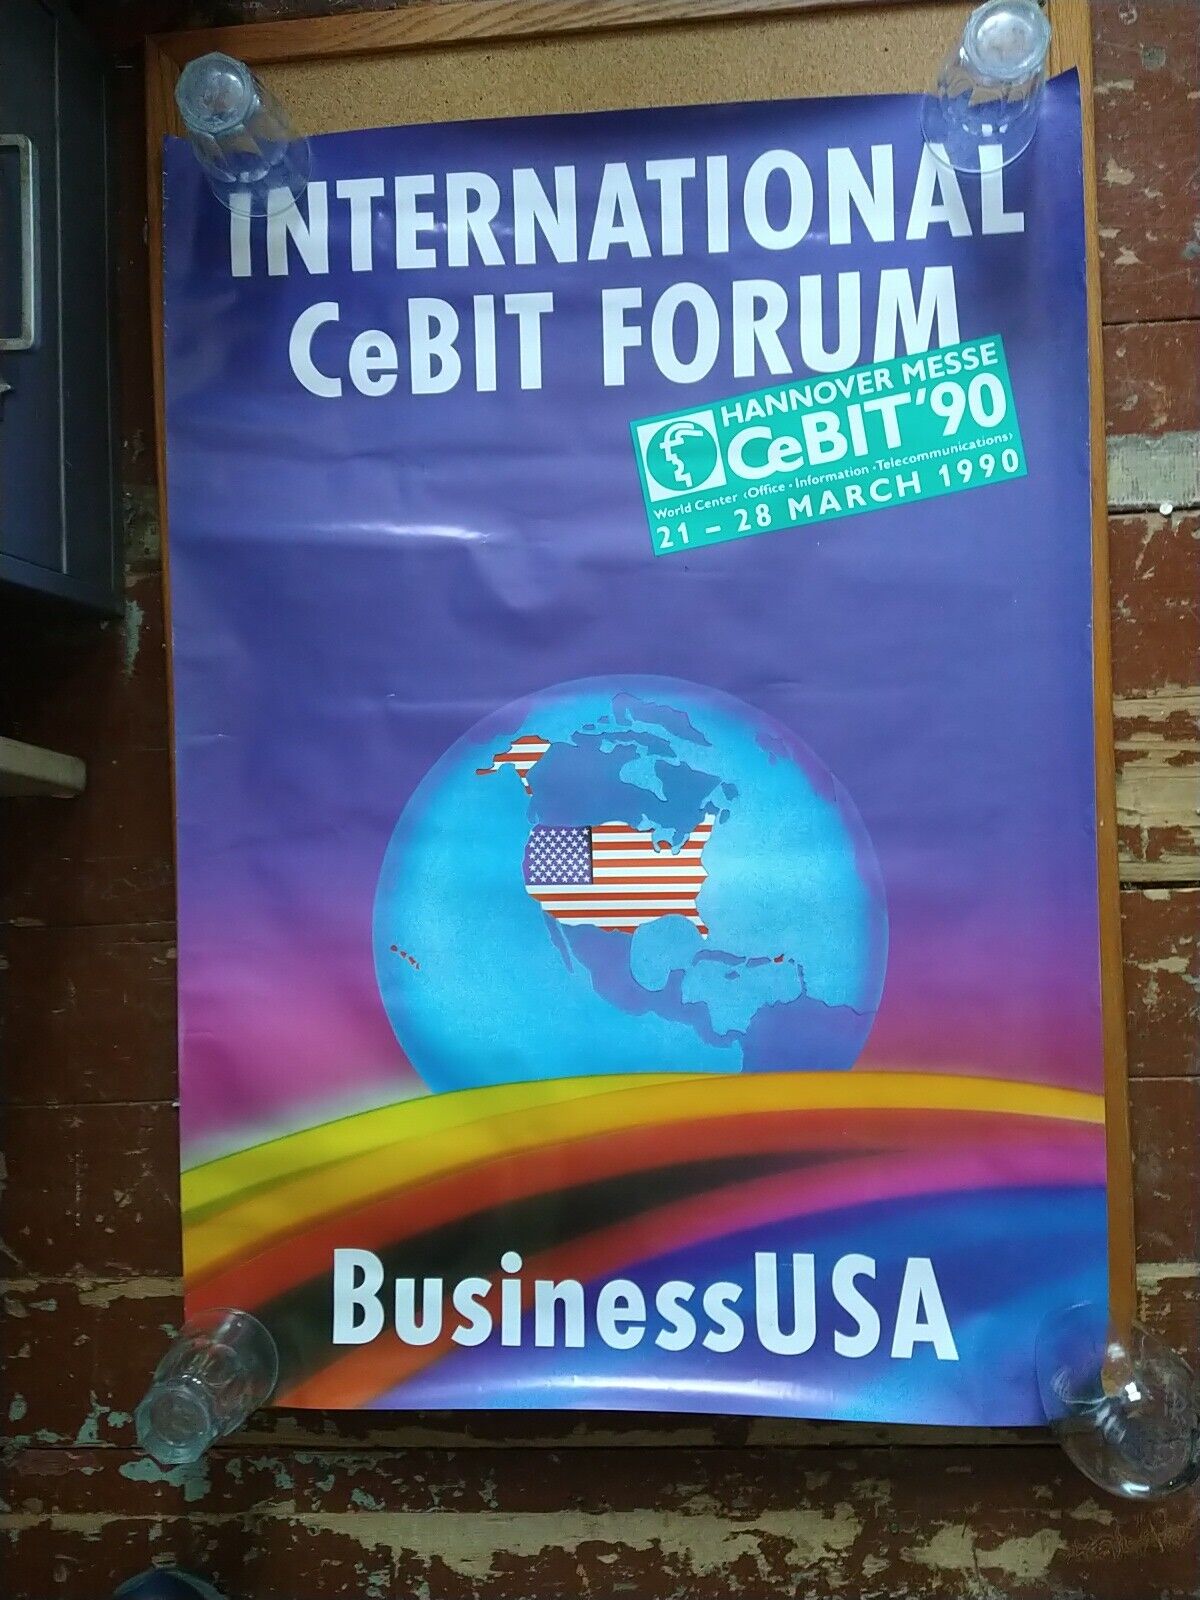 ITHistory (1990) Poster: Business USA - International CeBIT Forum